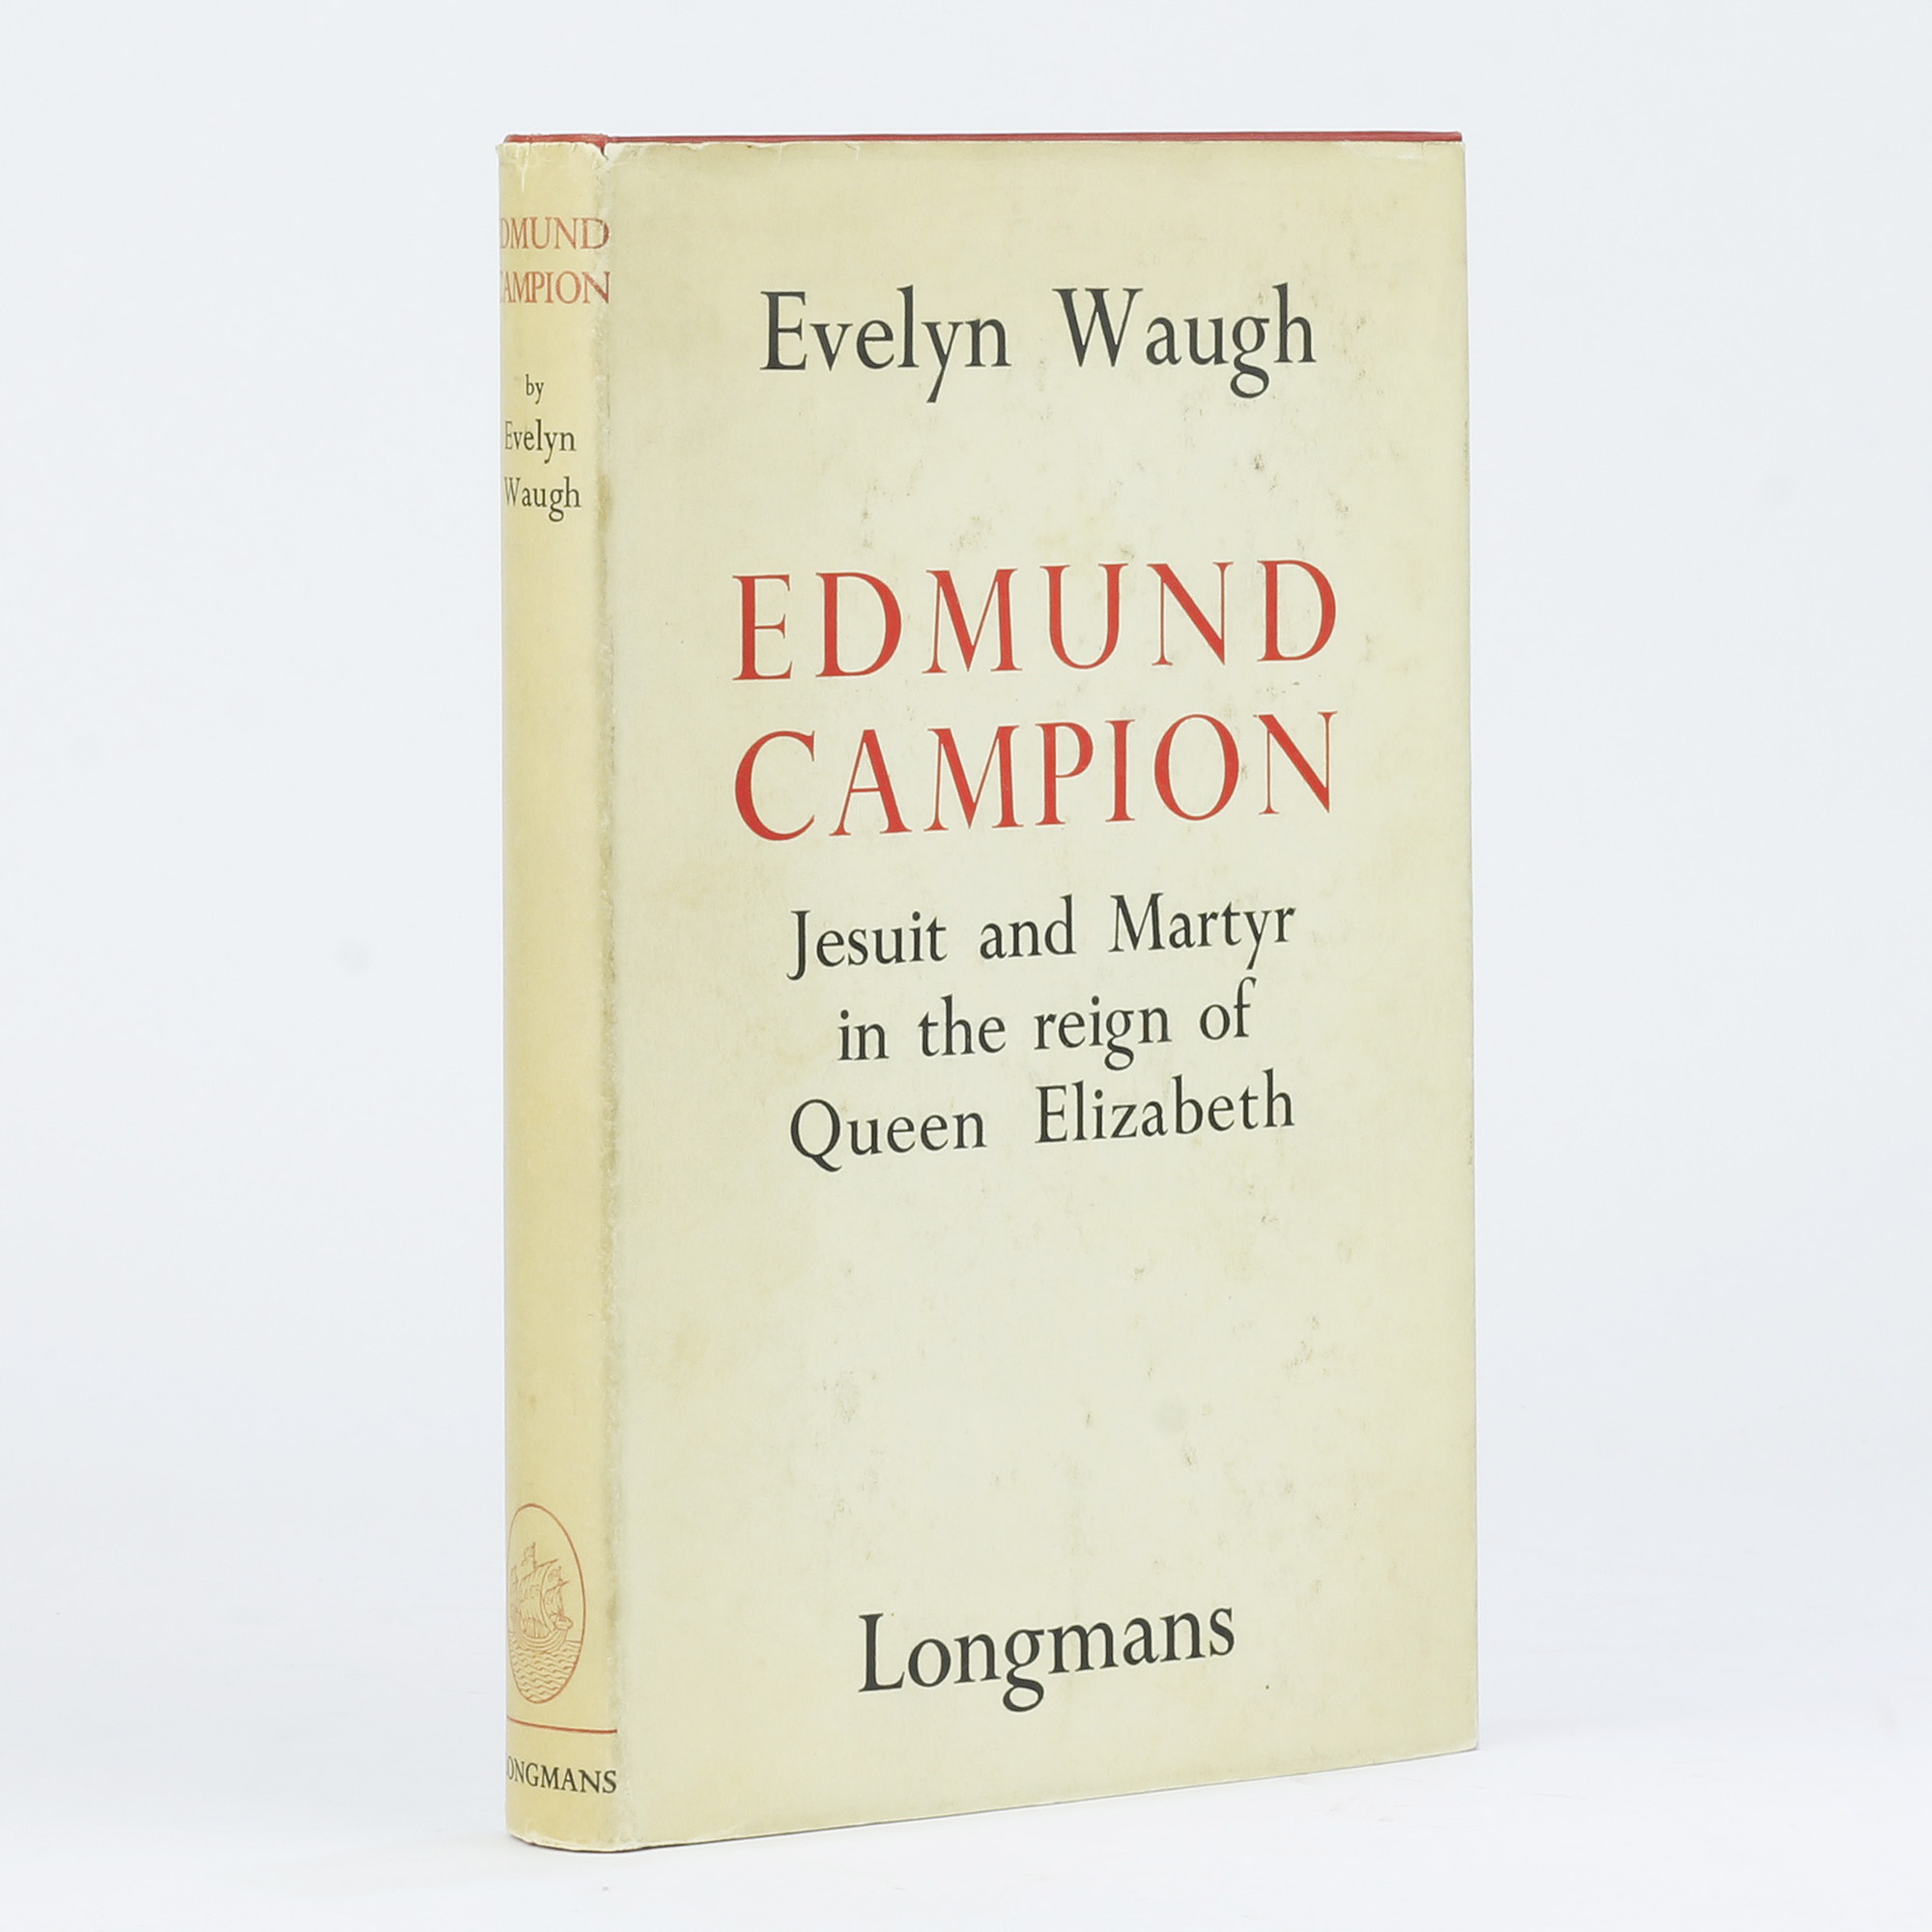 Edmund Campion by Evelyn Waugh